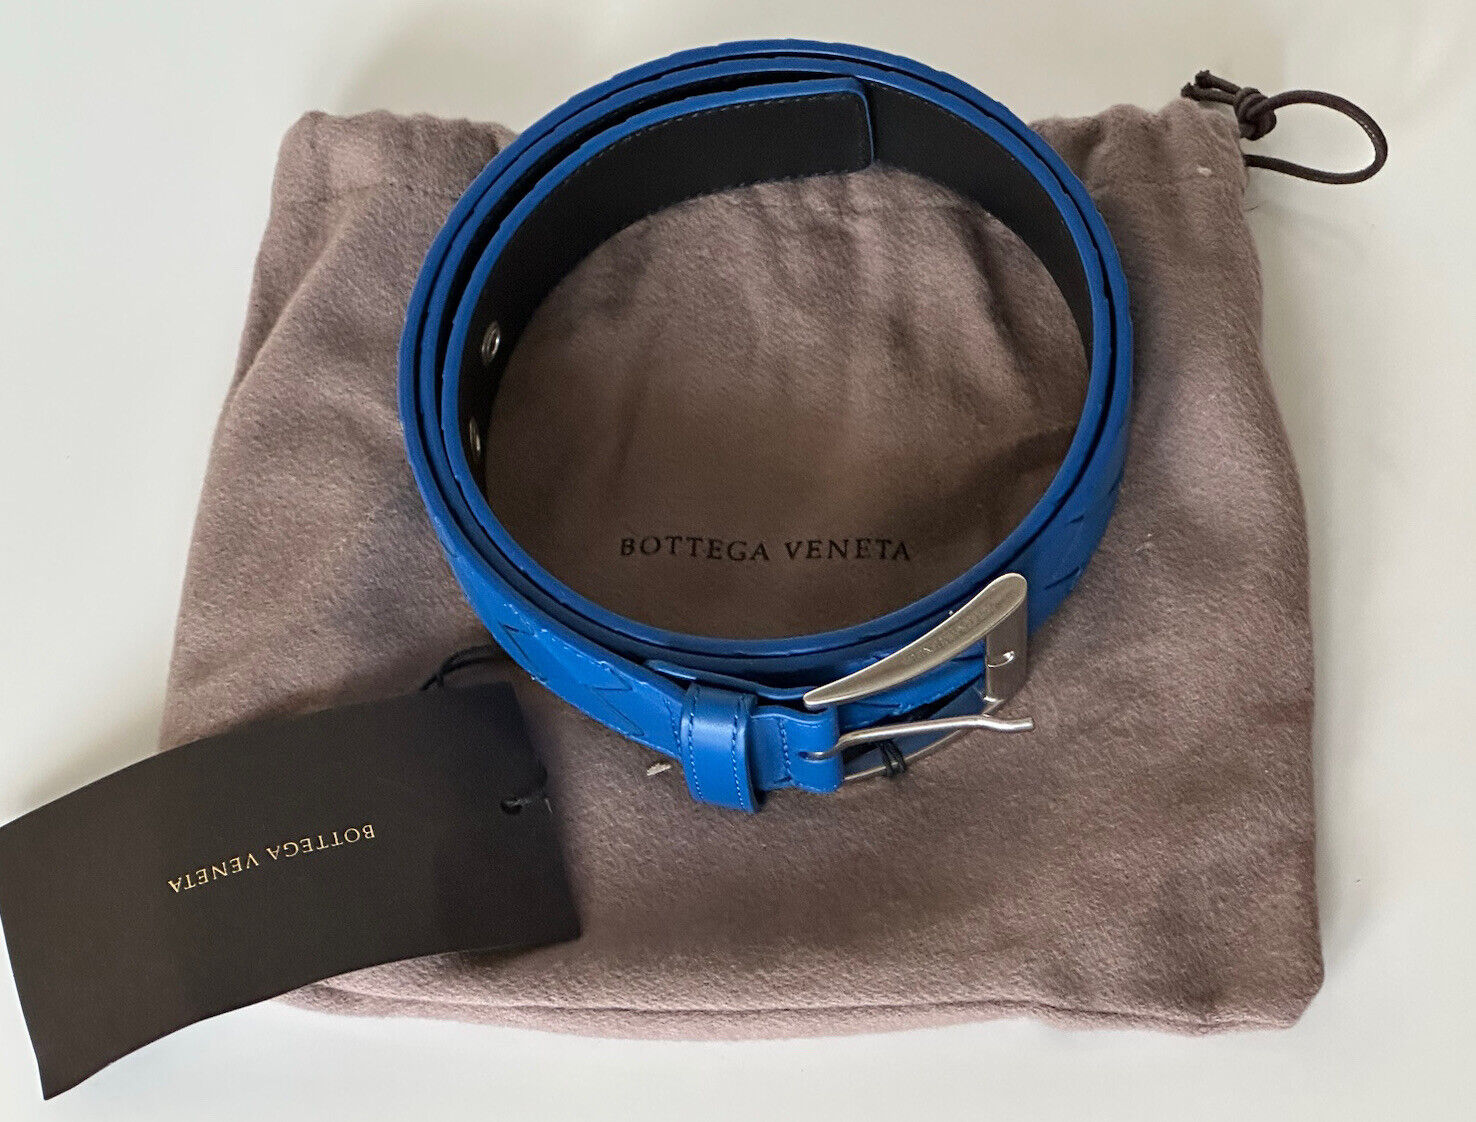 NWT $580 Синий ремень Bottega Veneta Intrecciato из кожи наппа 40/100 IT 580673 